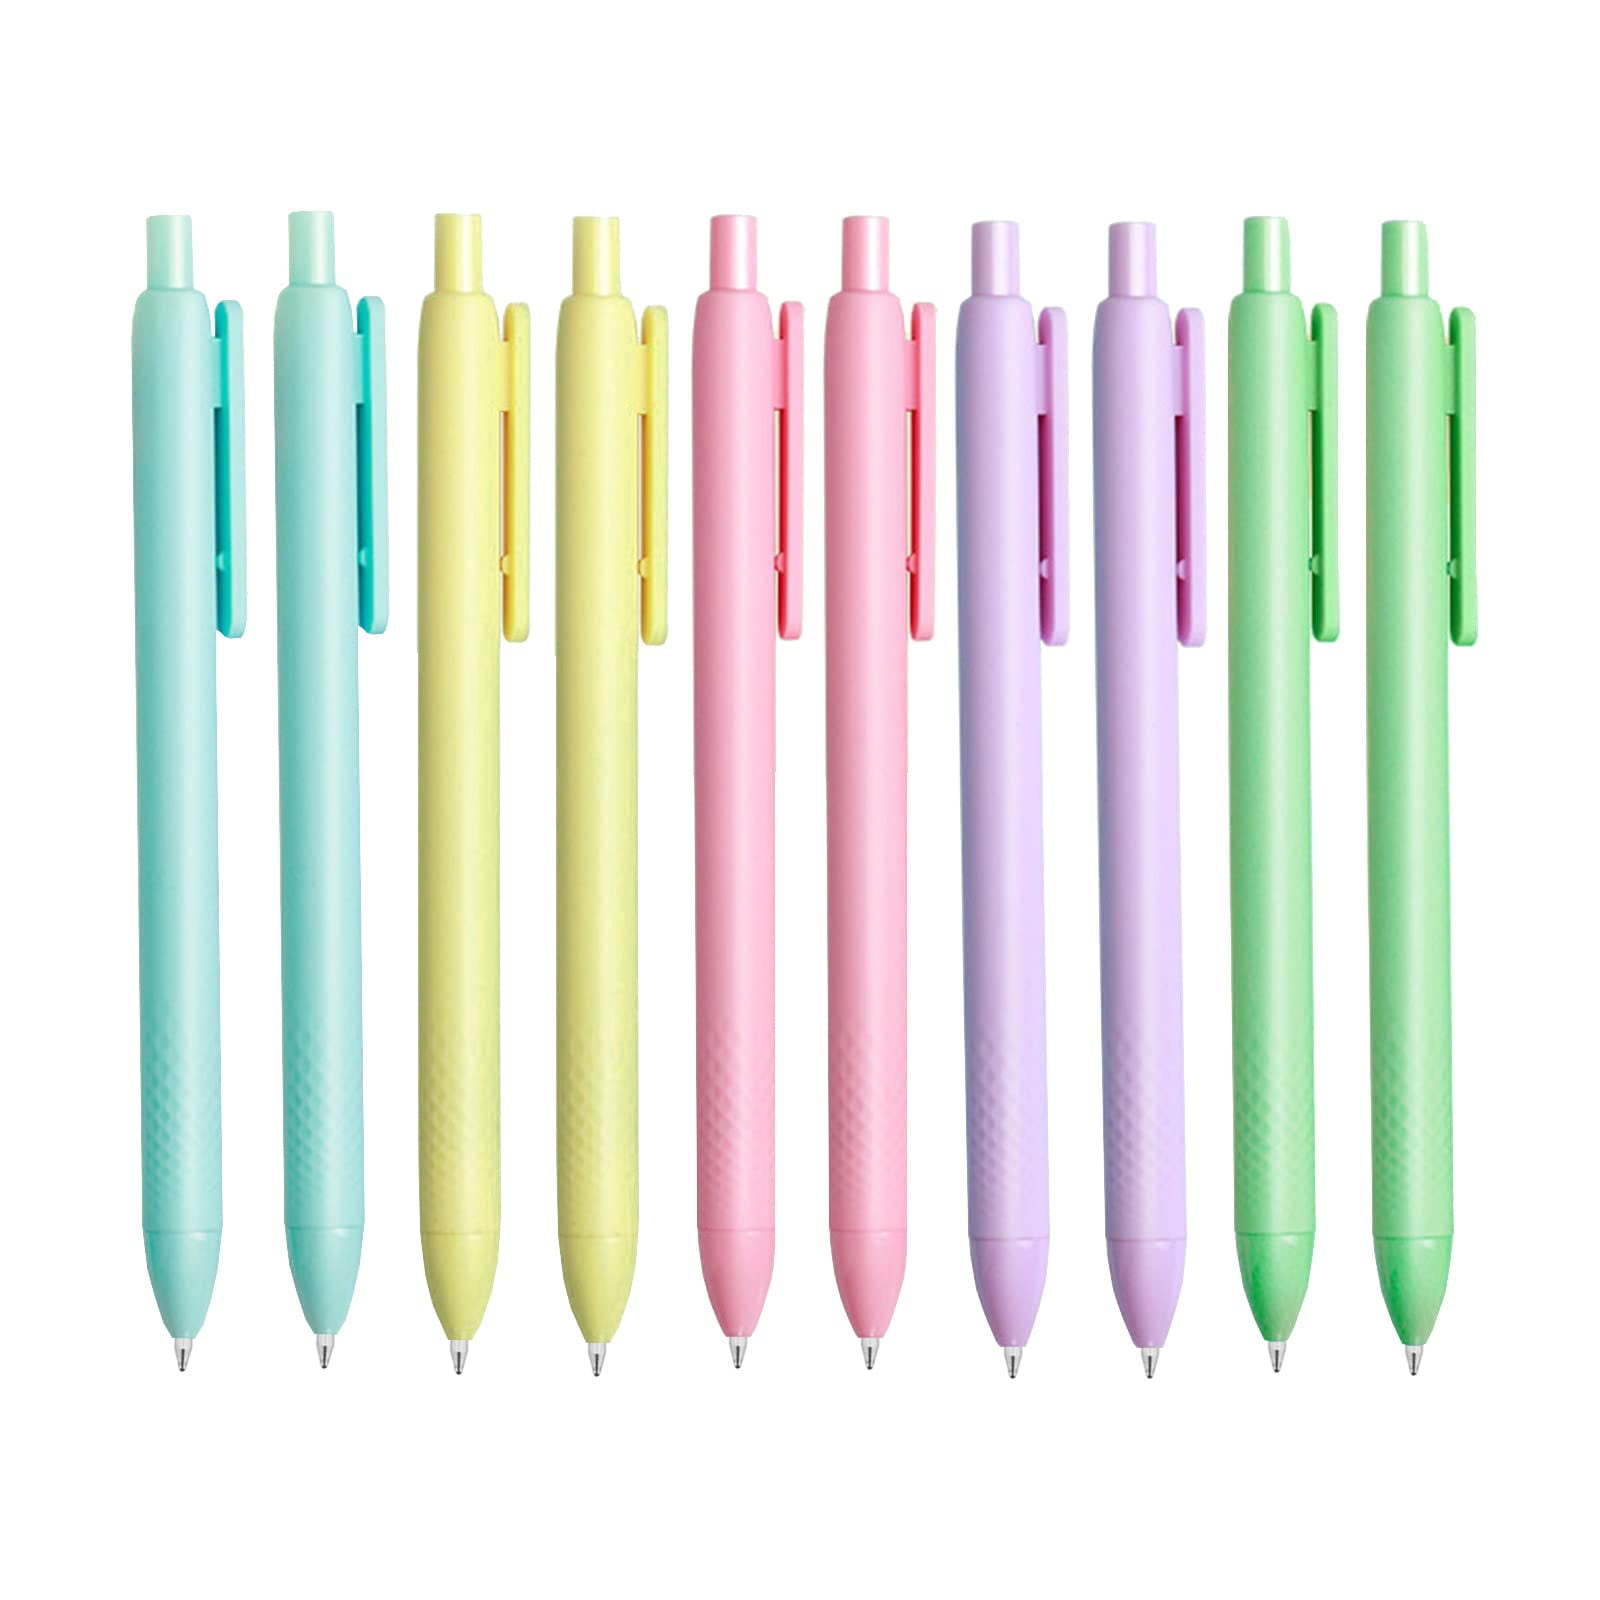 Drawdart 14 Pack Ballpoint Pens,Cute Pens for Note Taking,Pastel